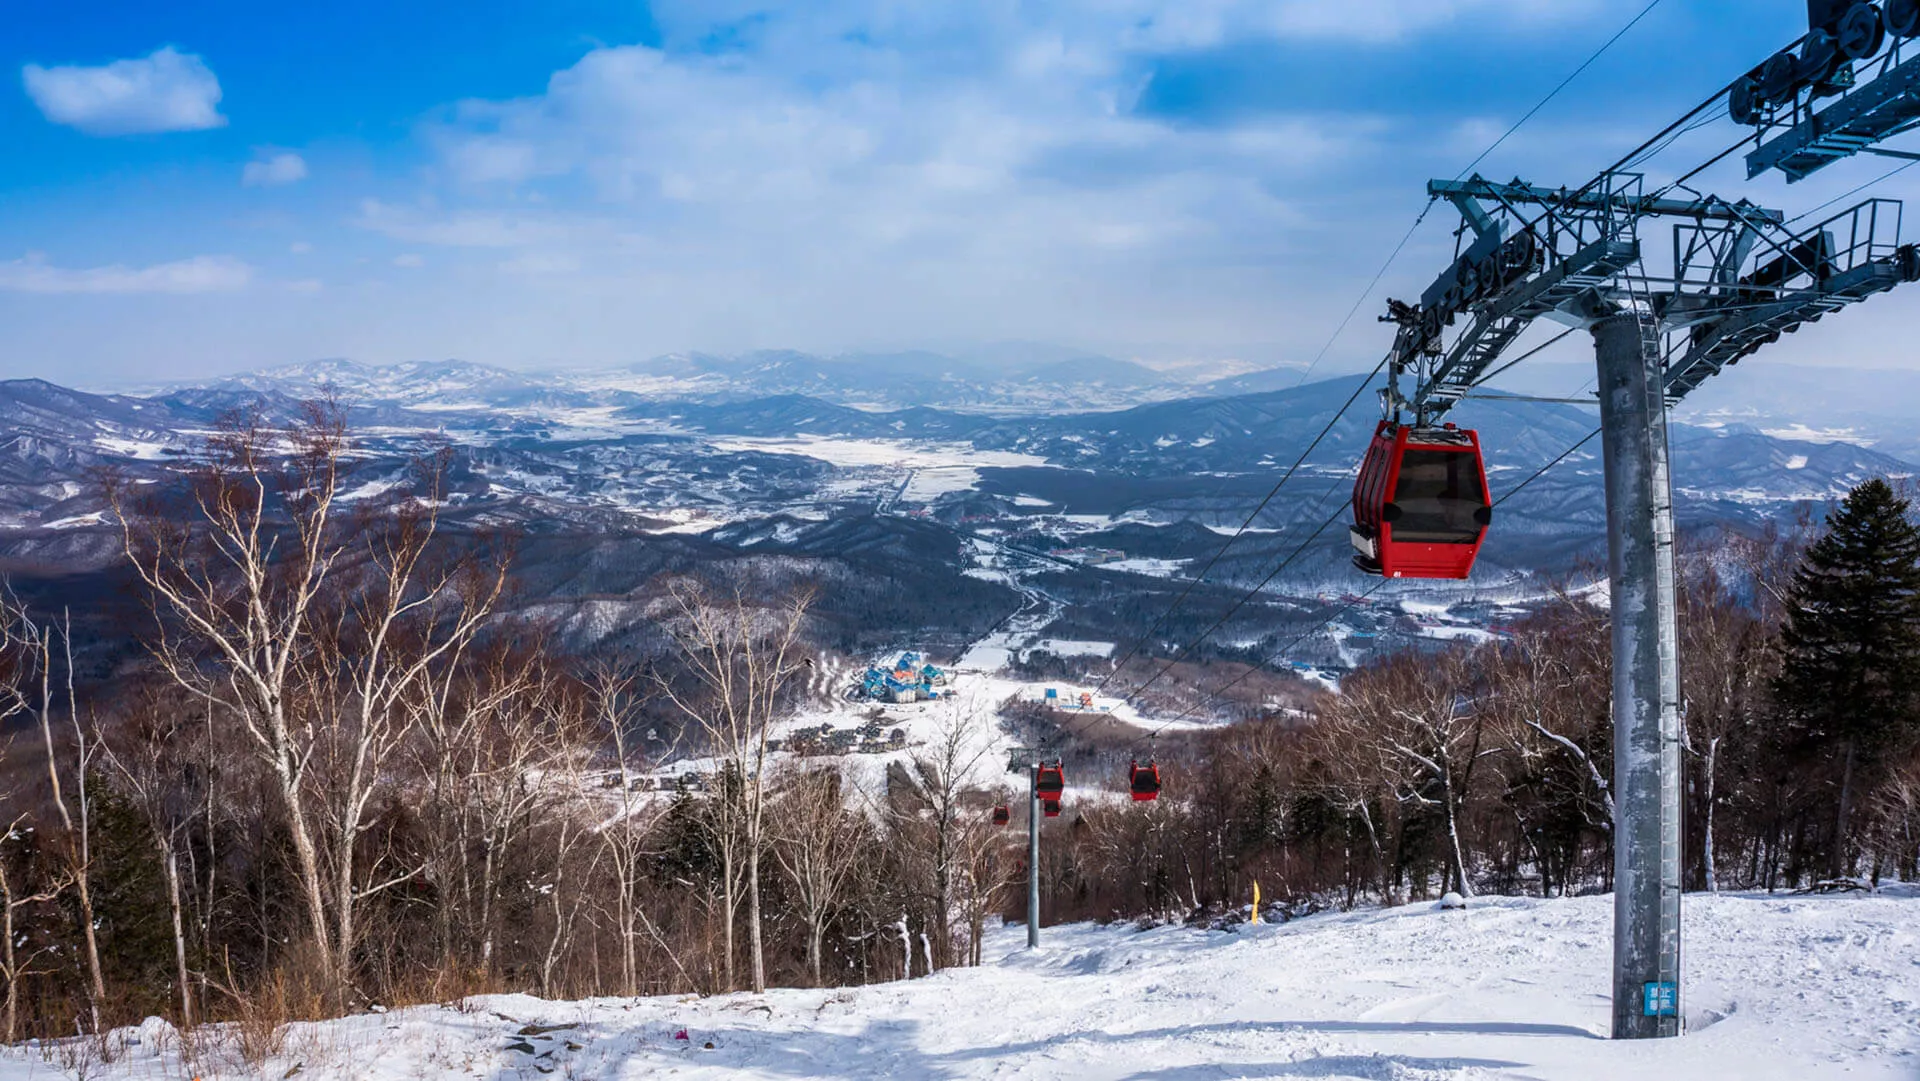 Beidahu Ski Resort in China, East Asia | Snowboarding,Skiing - Rated 3.4